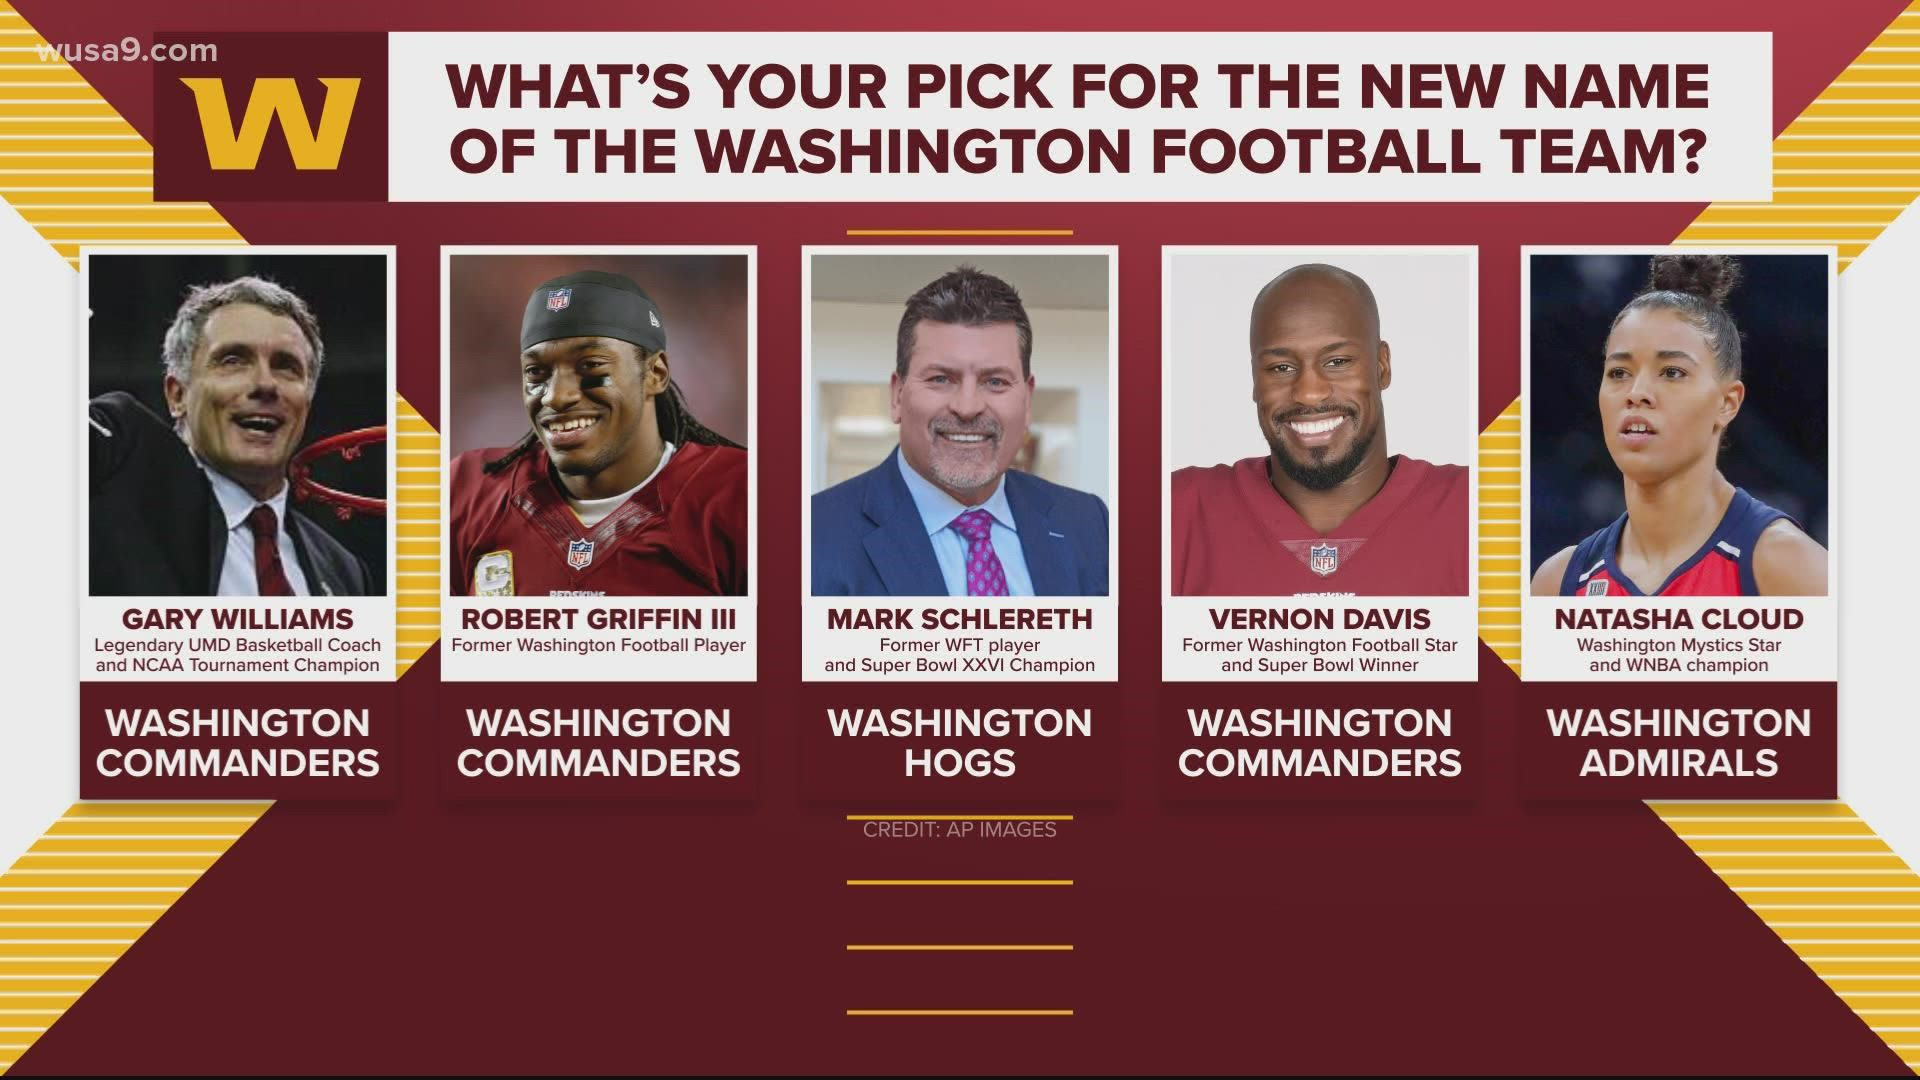 Joe Theismann: Washington Football Team will be Commanders